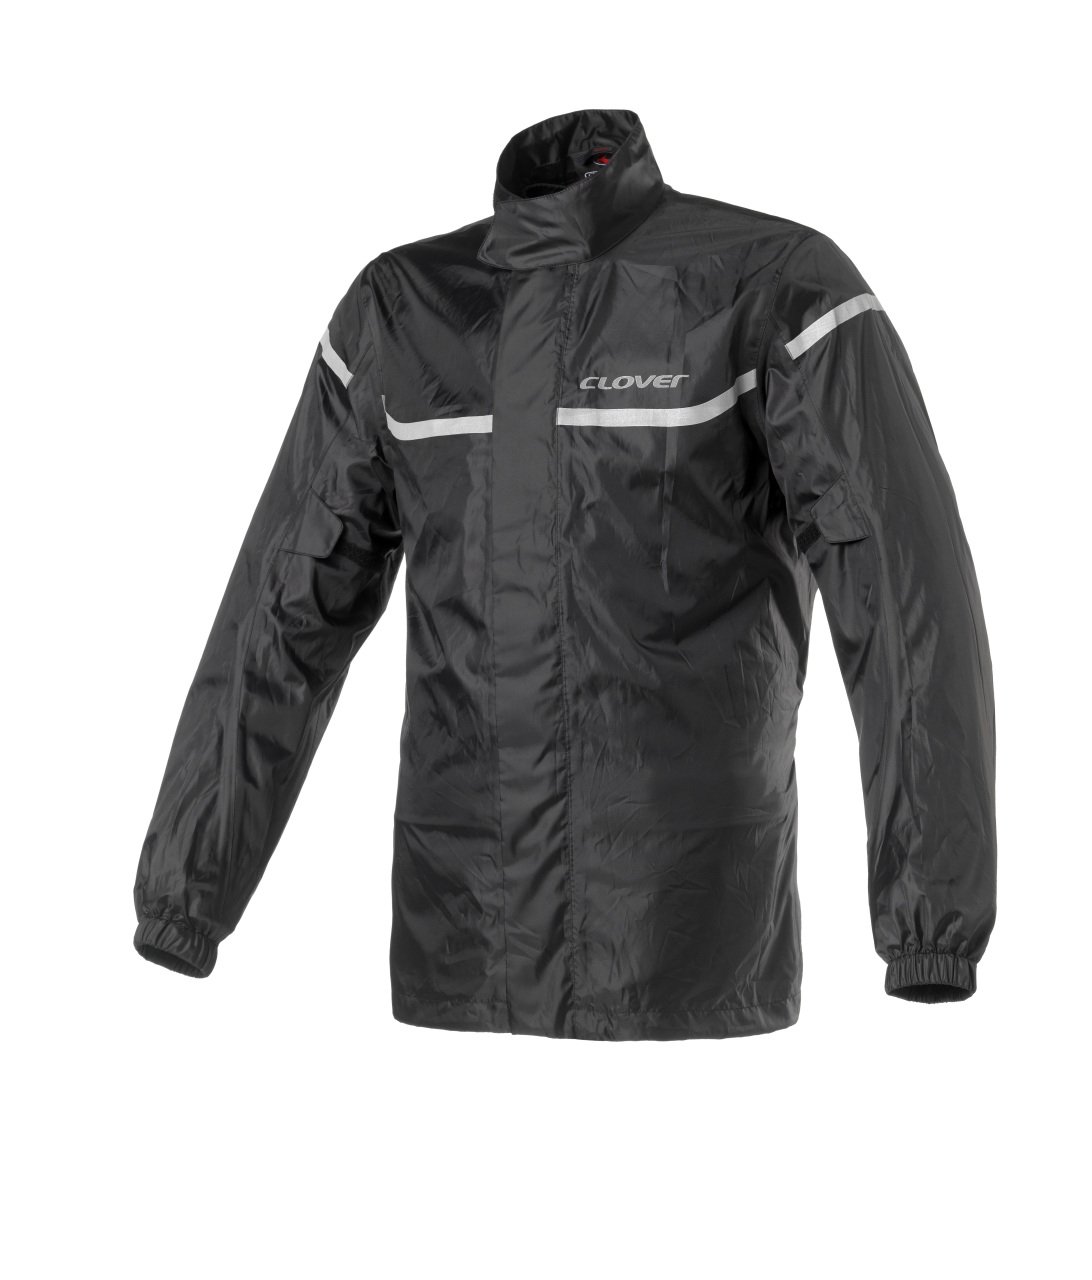 Clover Wet Jacket Pro WP / Üst Yağmurluk Siyah